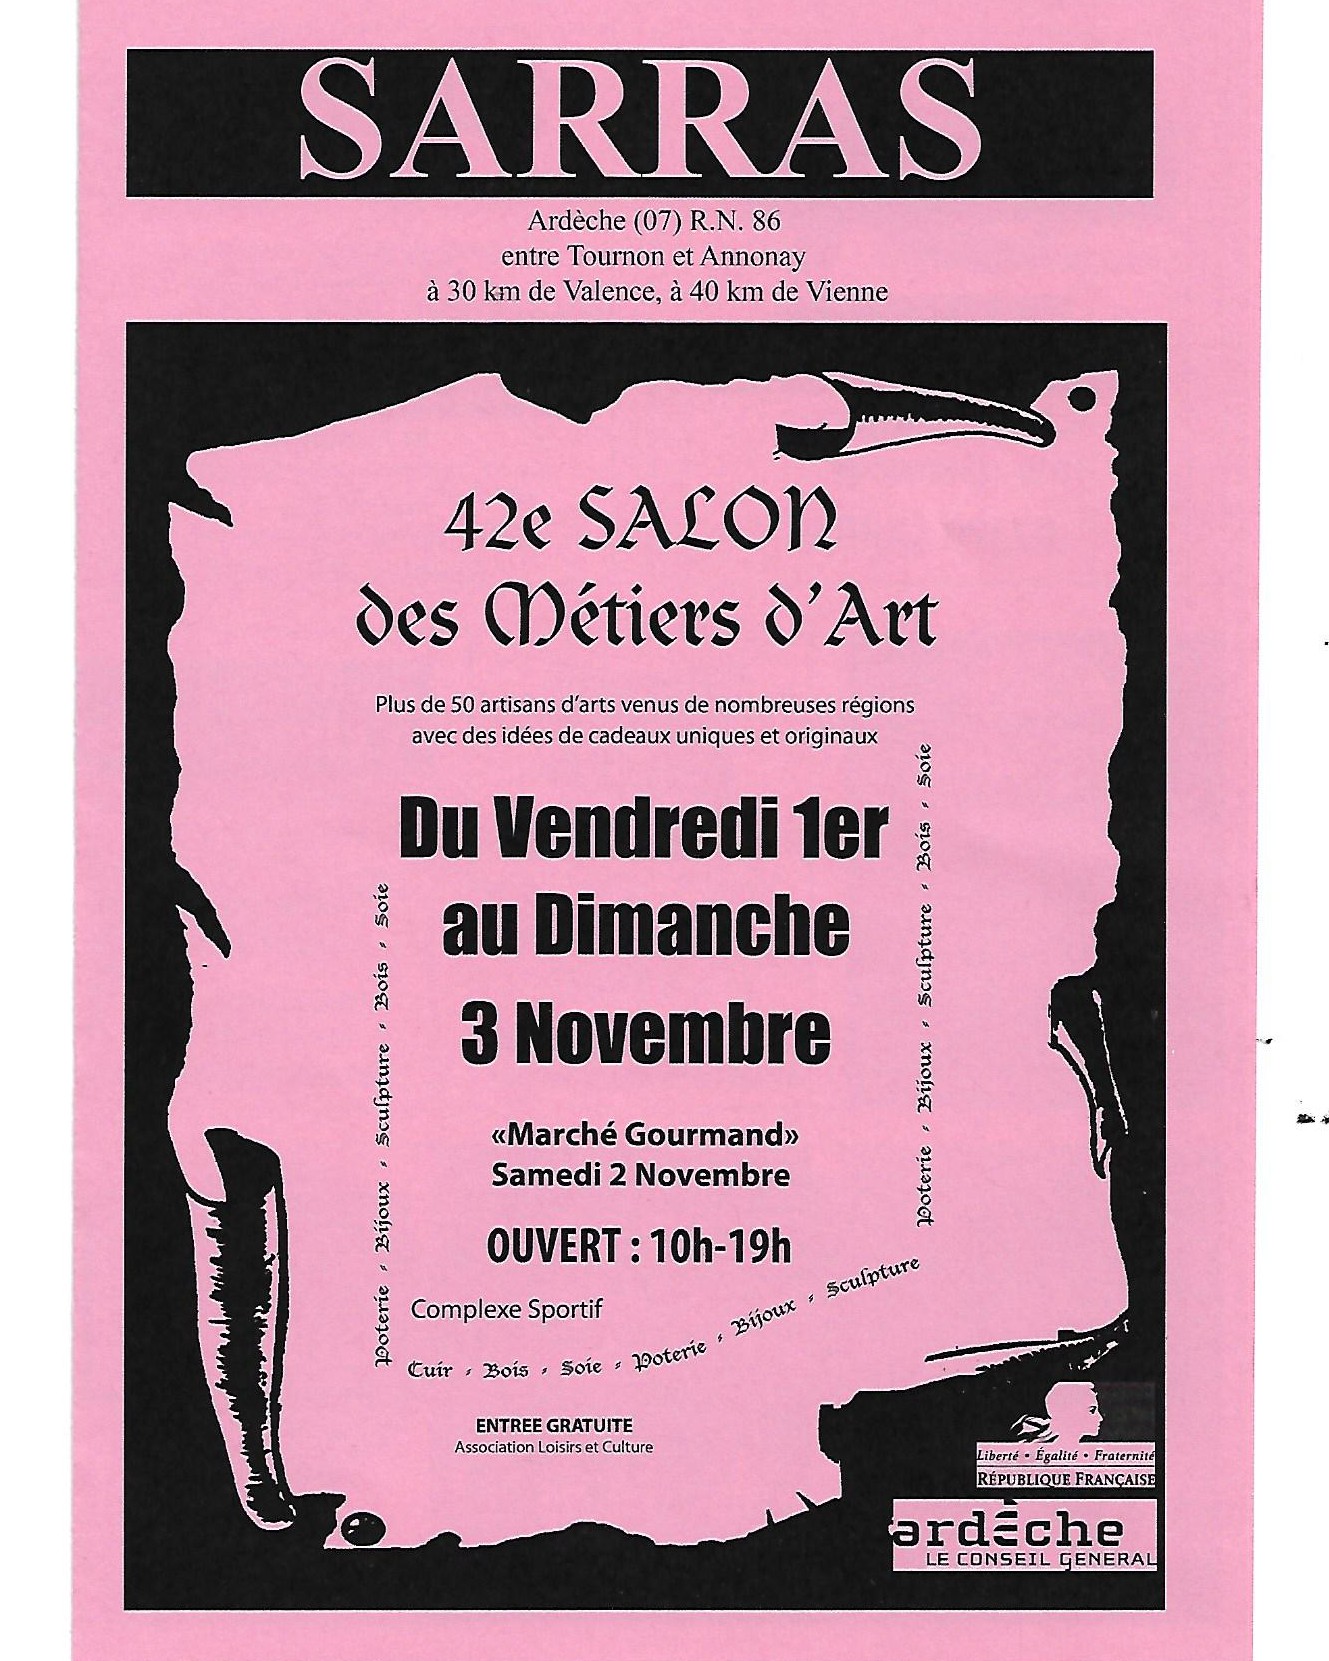 Exposition Sarras Ardèche Ofilducuir Salon métiers d'art